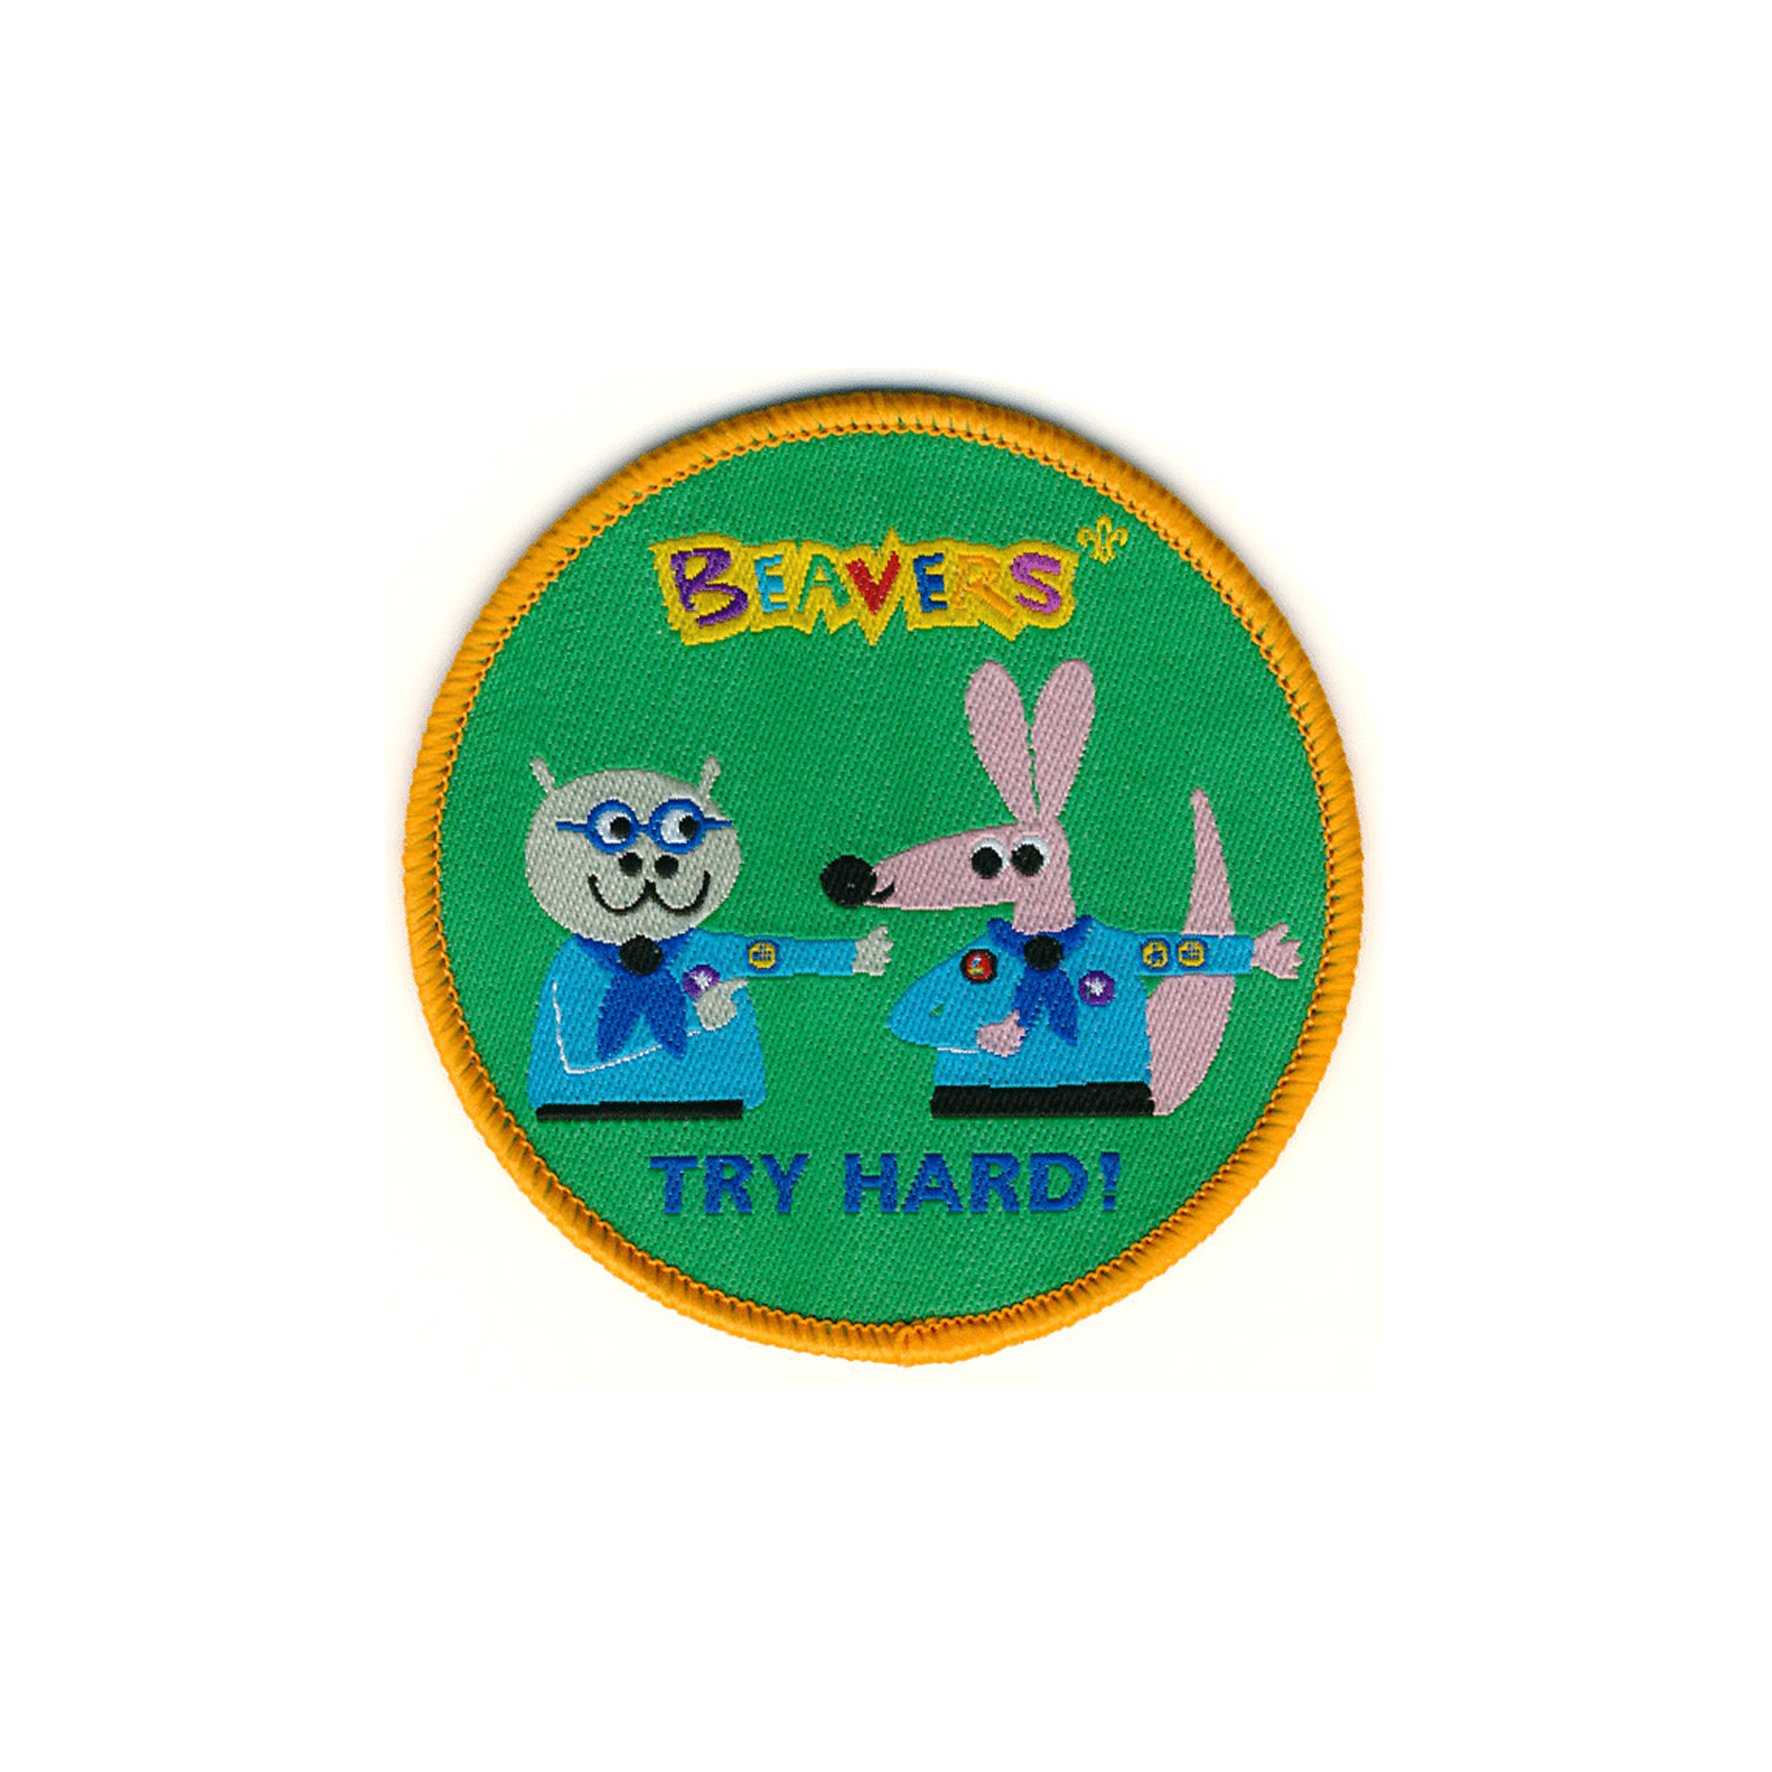 Rob Hodgson Beaver Scout badge